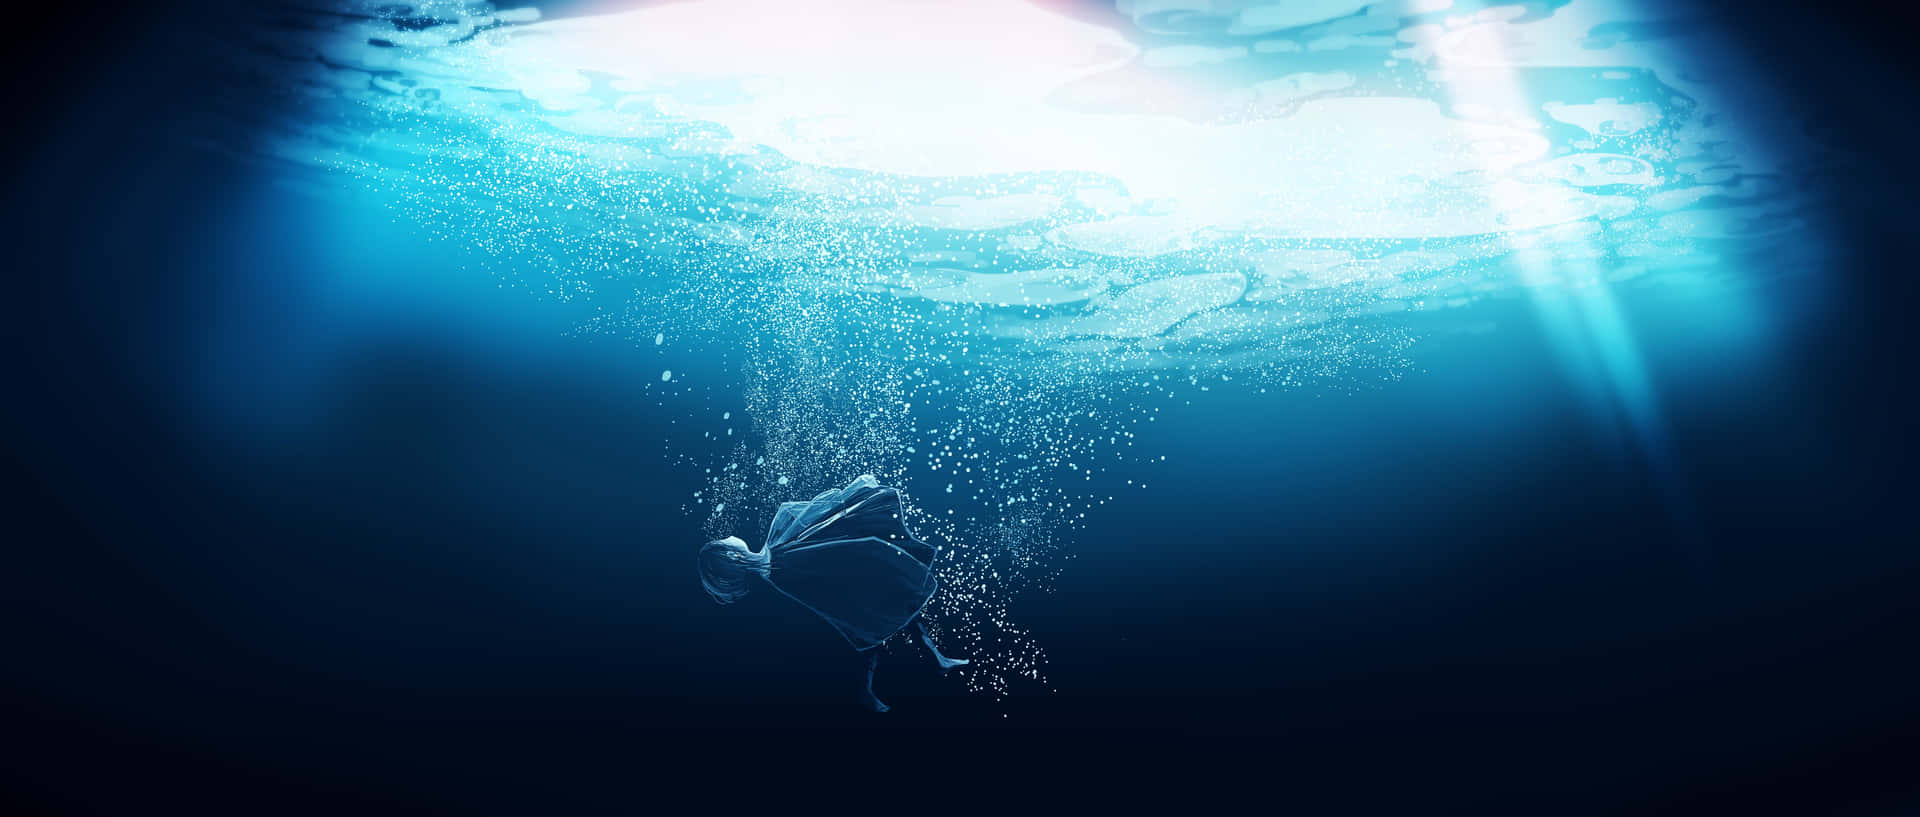 "The wonders of the underwater world"